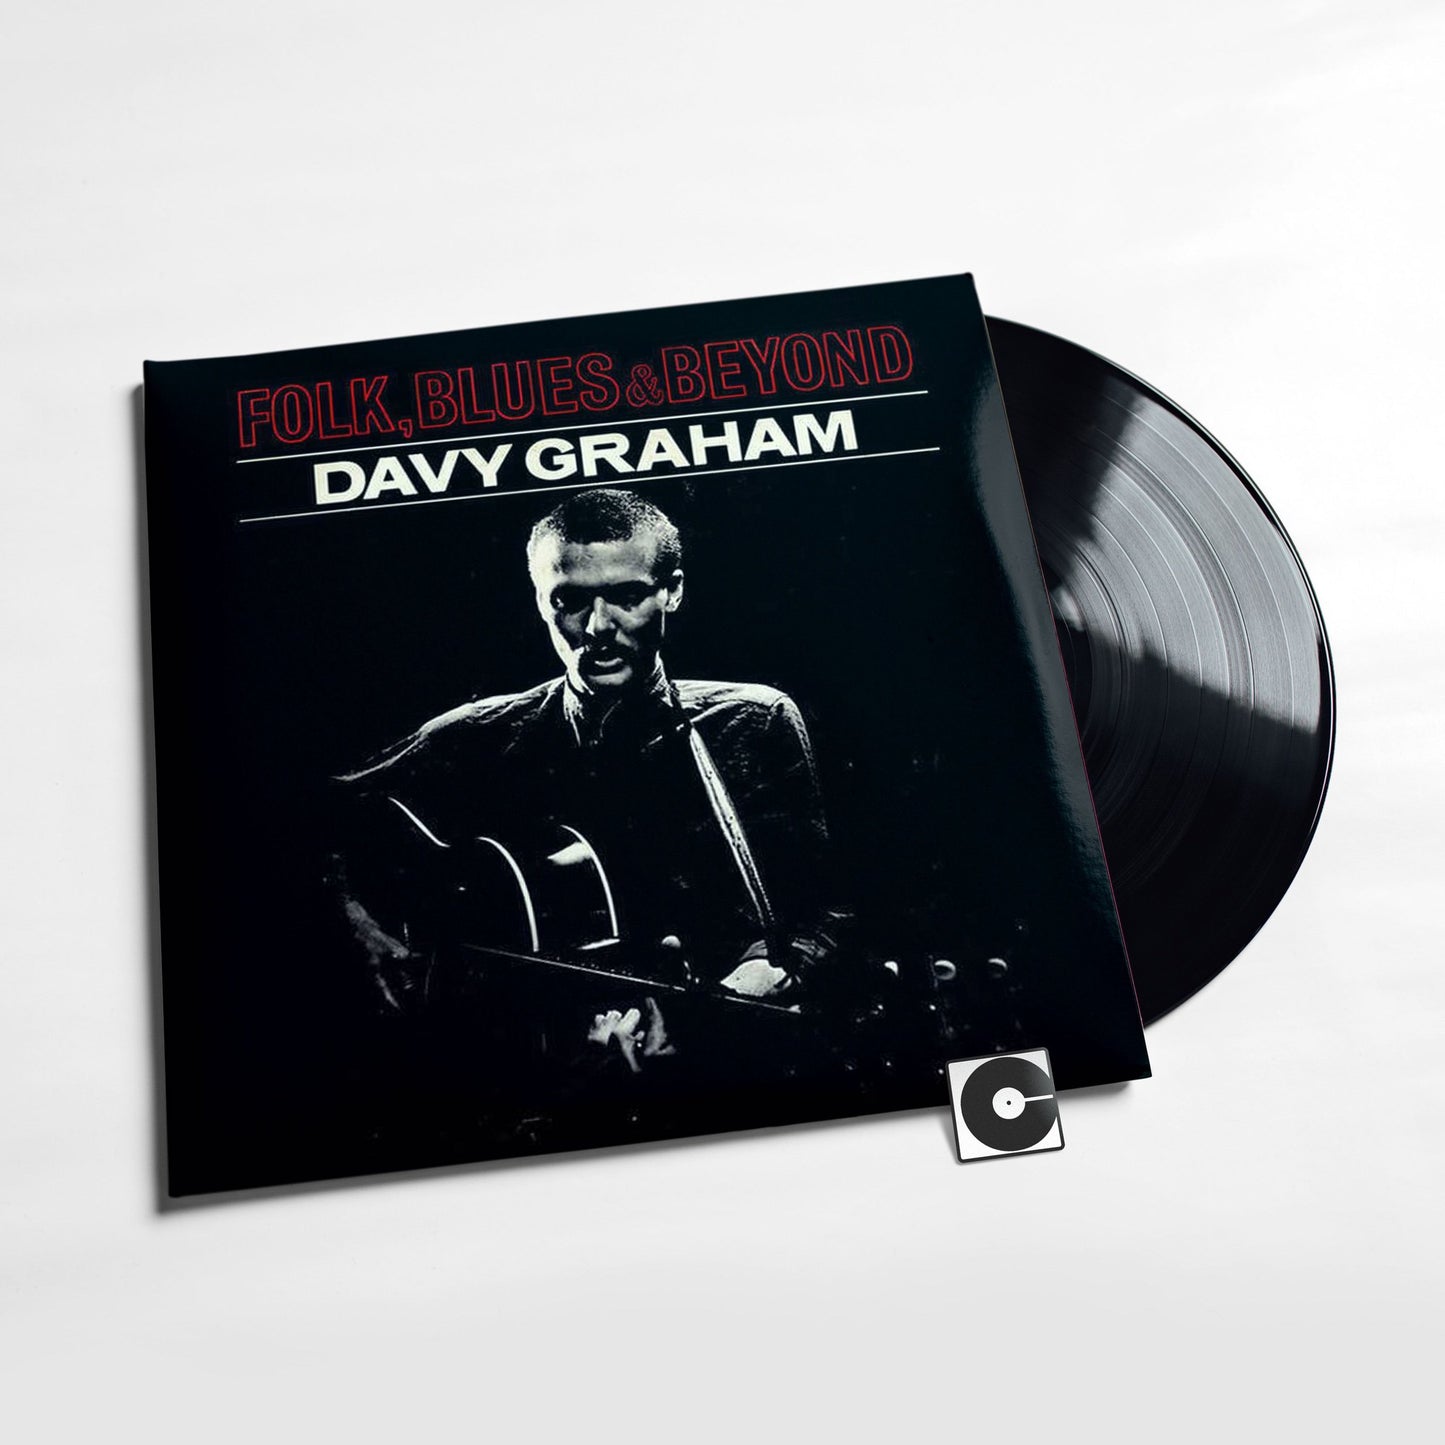 Davy Graham - "Folk, Blues and Beyond"